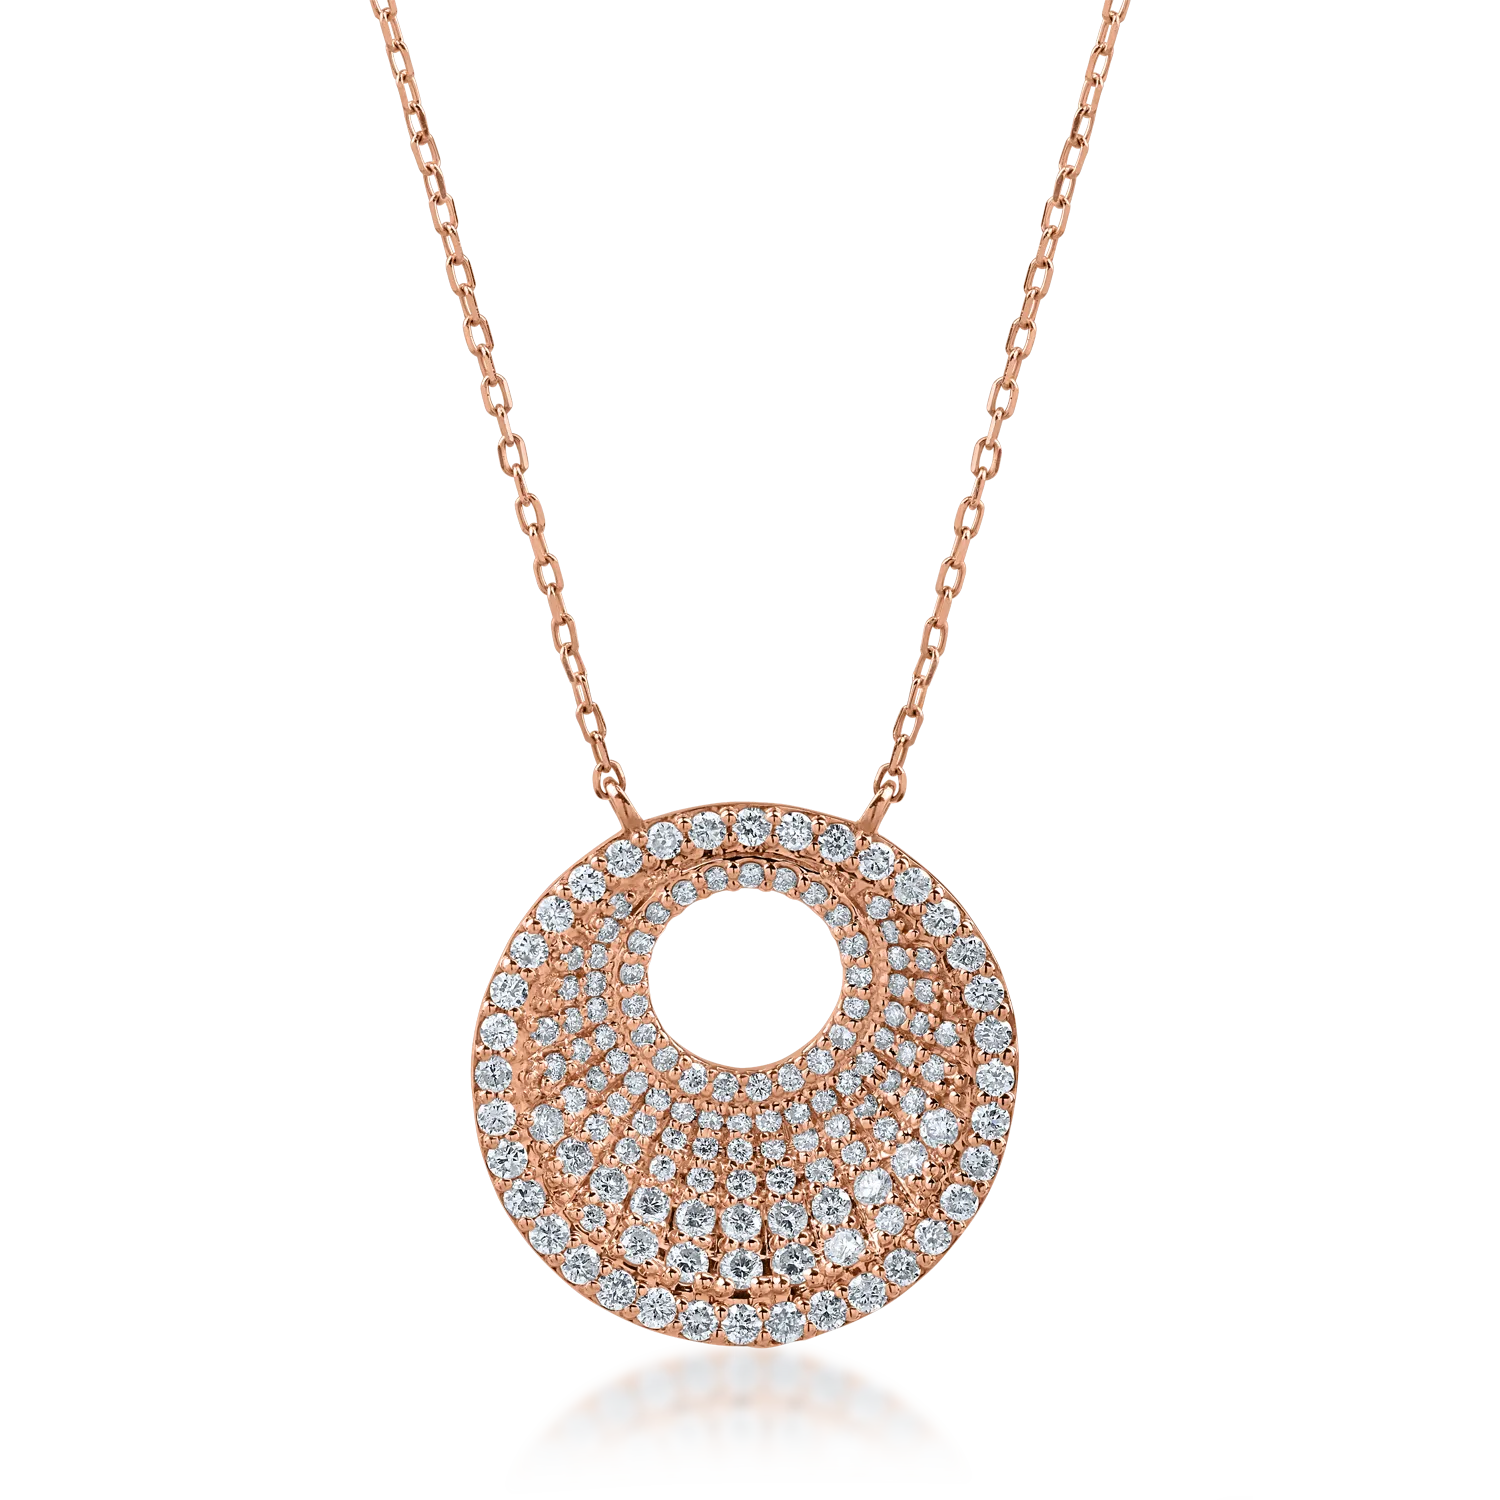 Rose gold geometric pendant necklace with 1.07ct diamonds